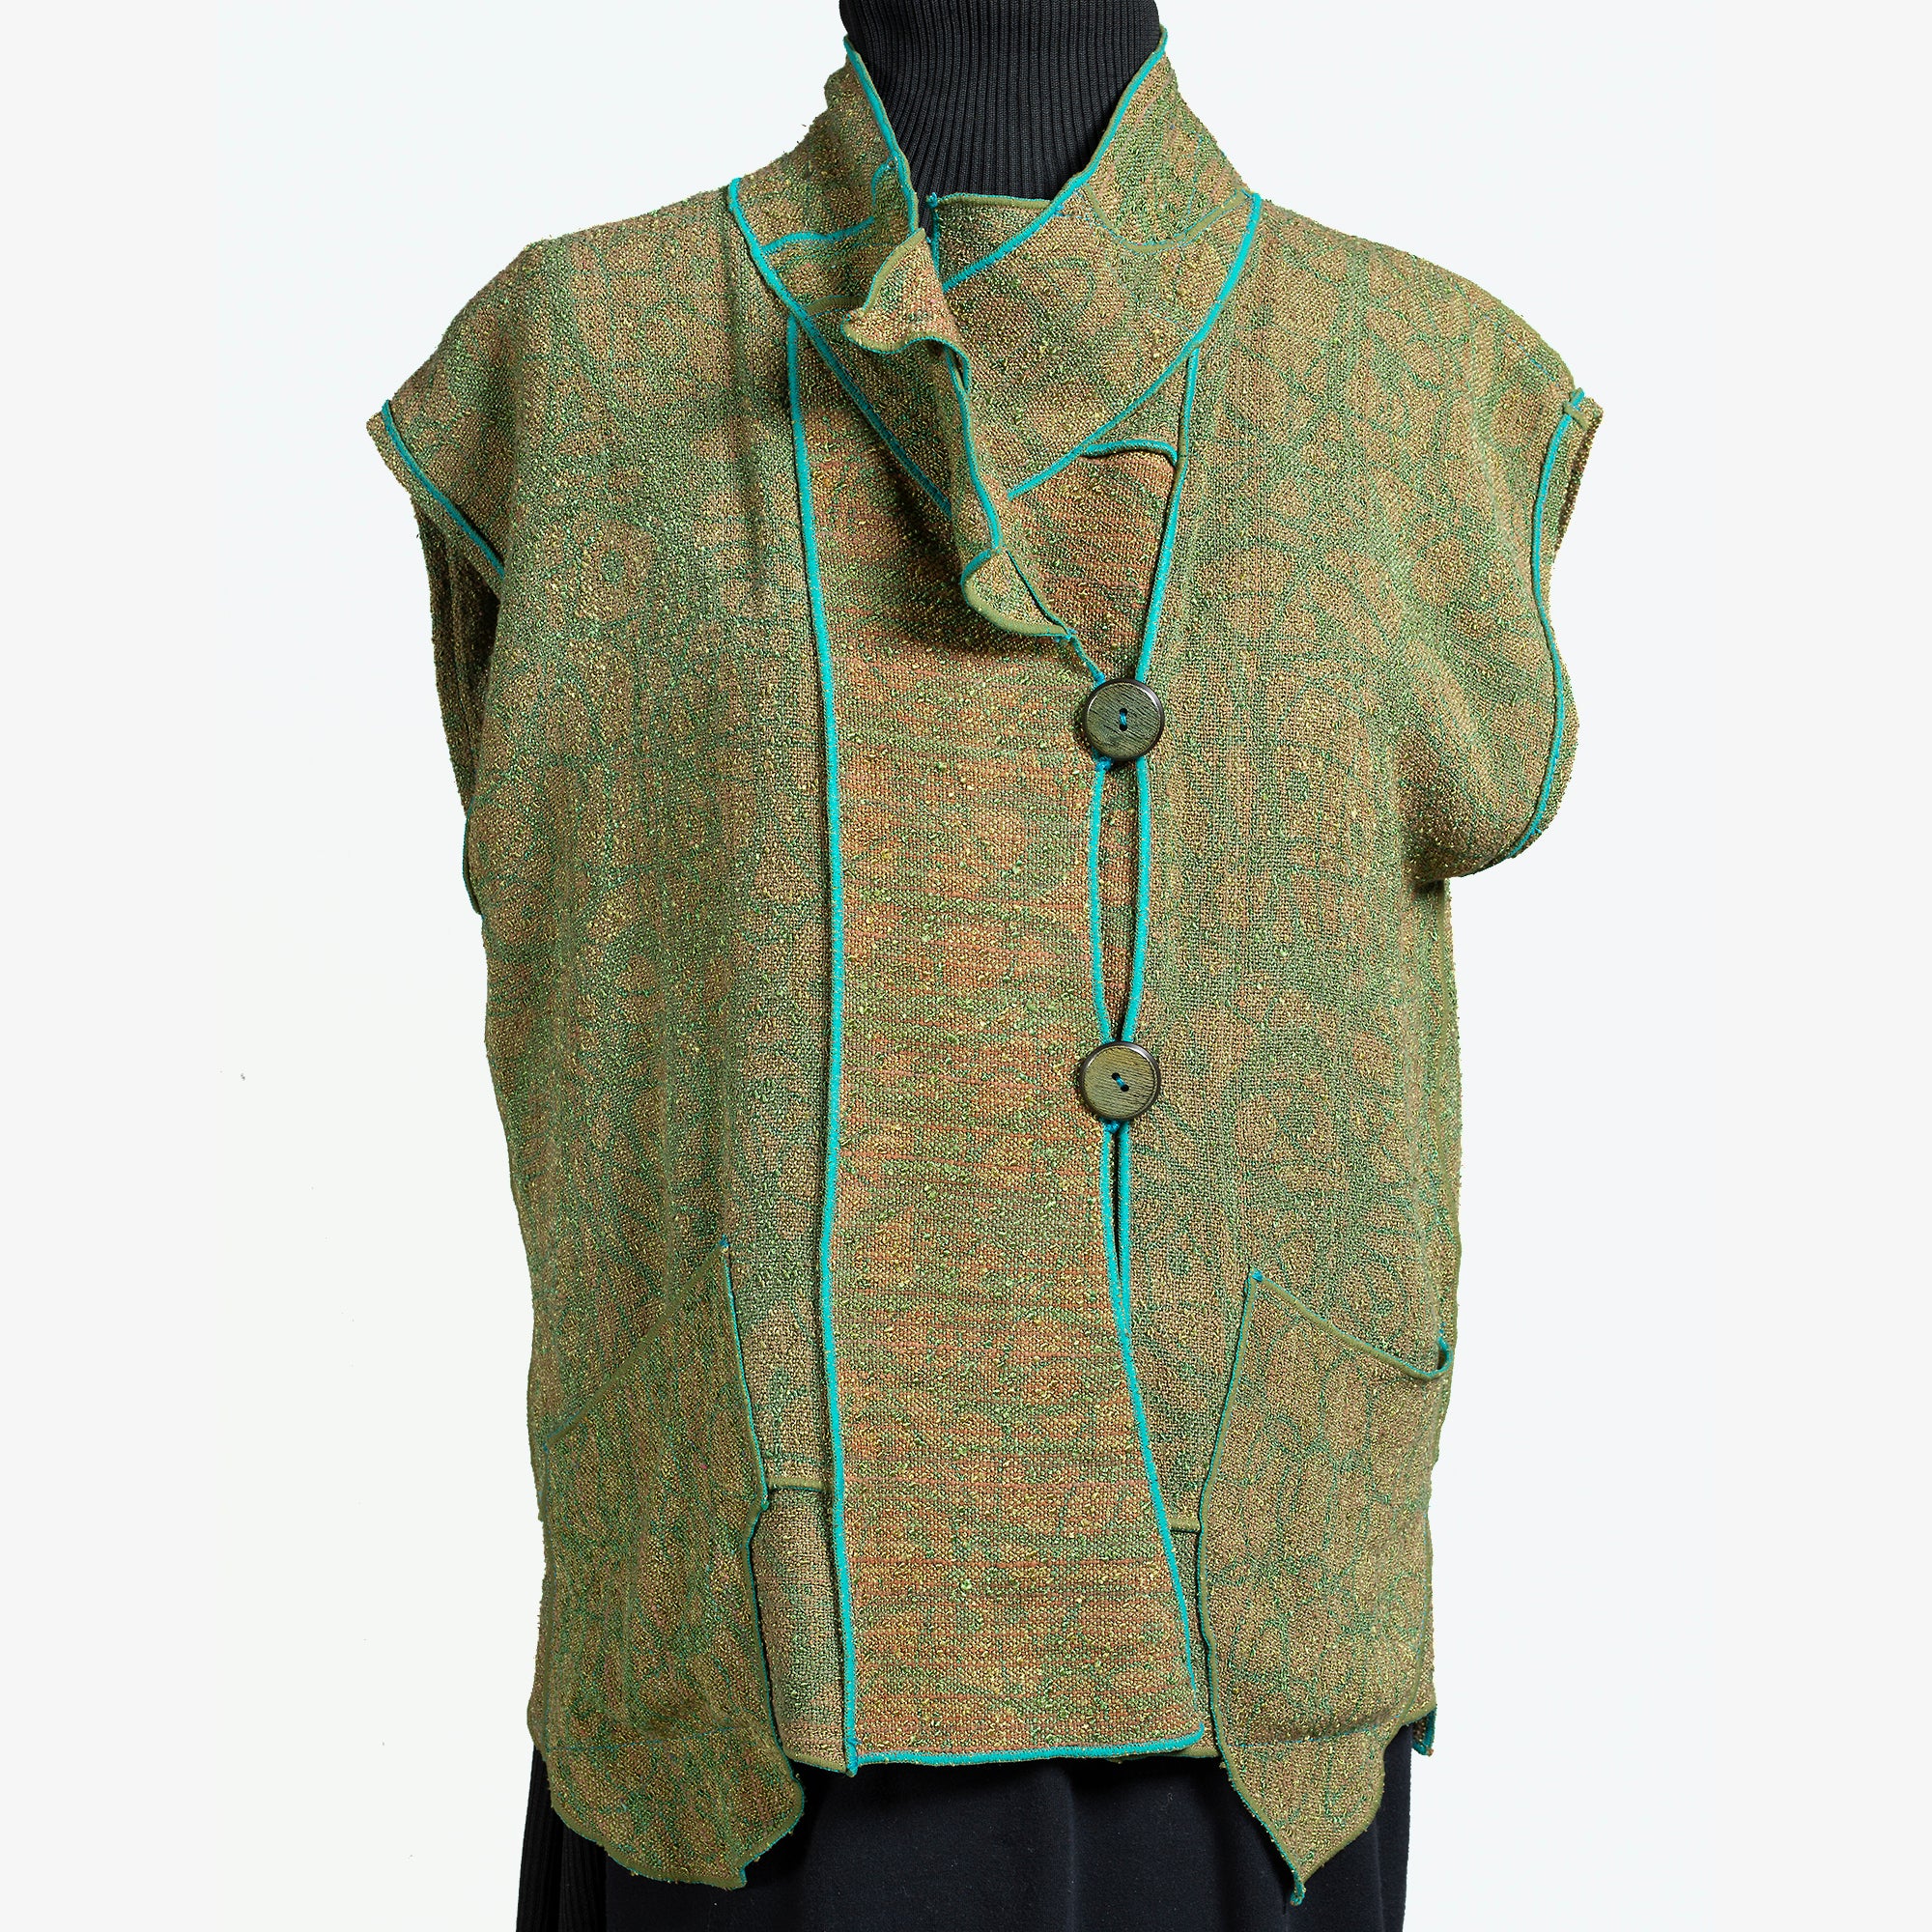 Judith Bird Vest, Short, Turquoise/Olive/Tan, XS/S